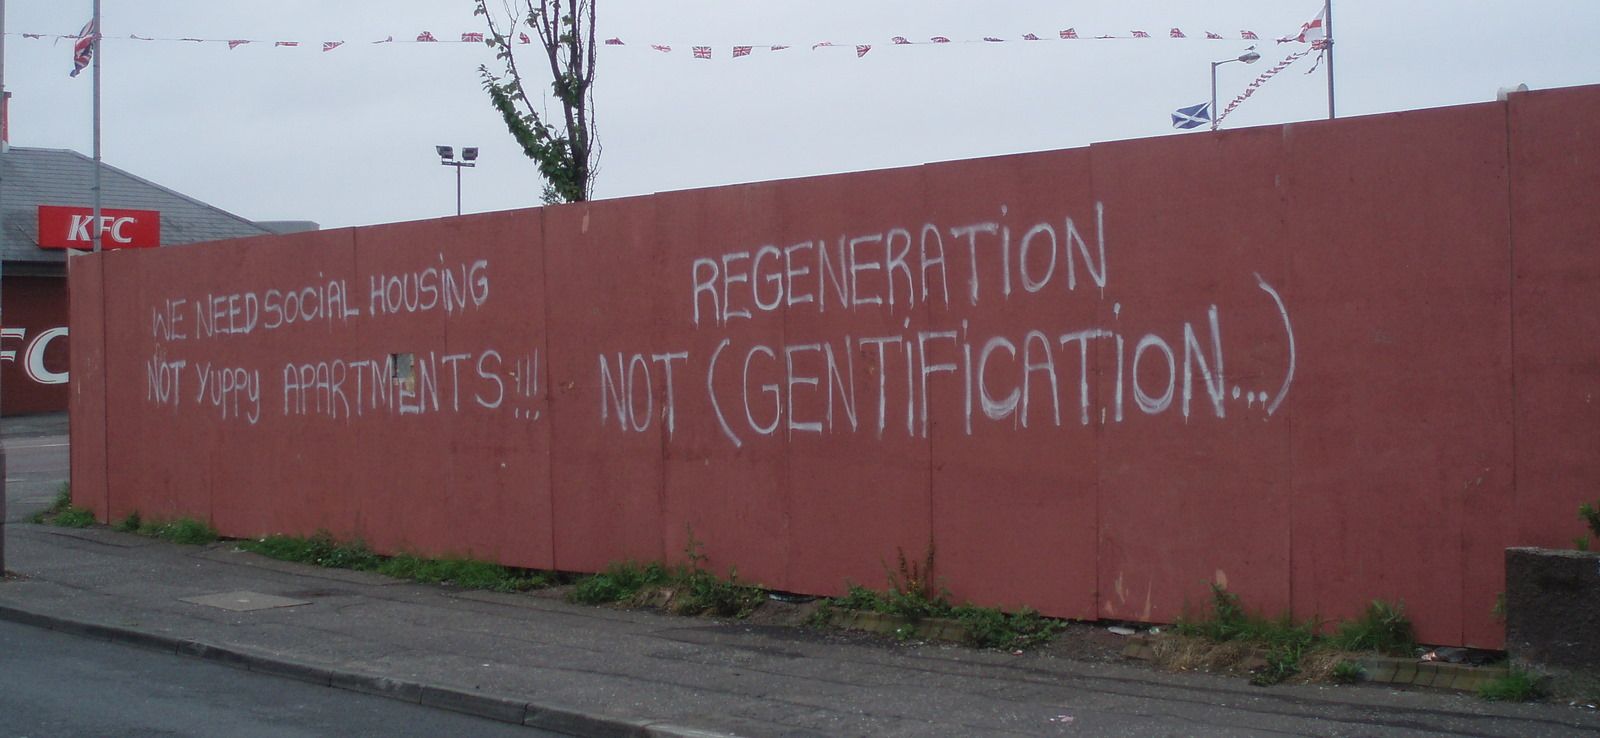 Ending residential segregation is not gentrification